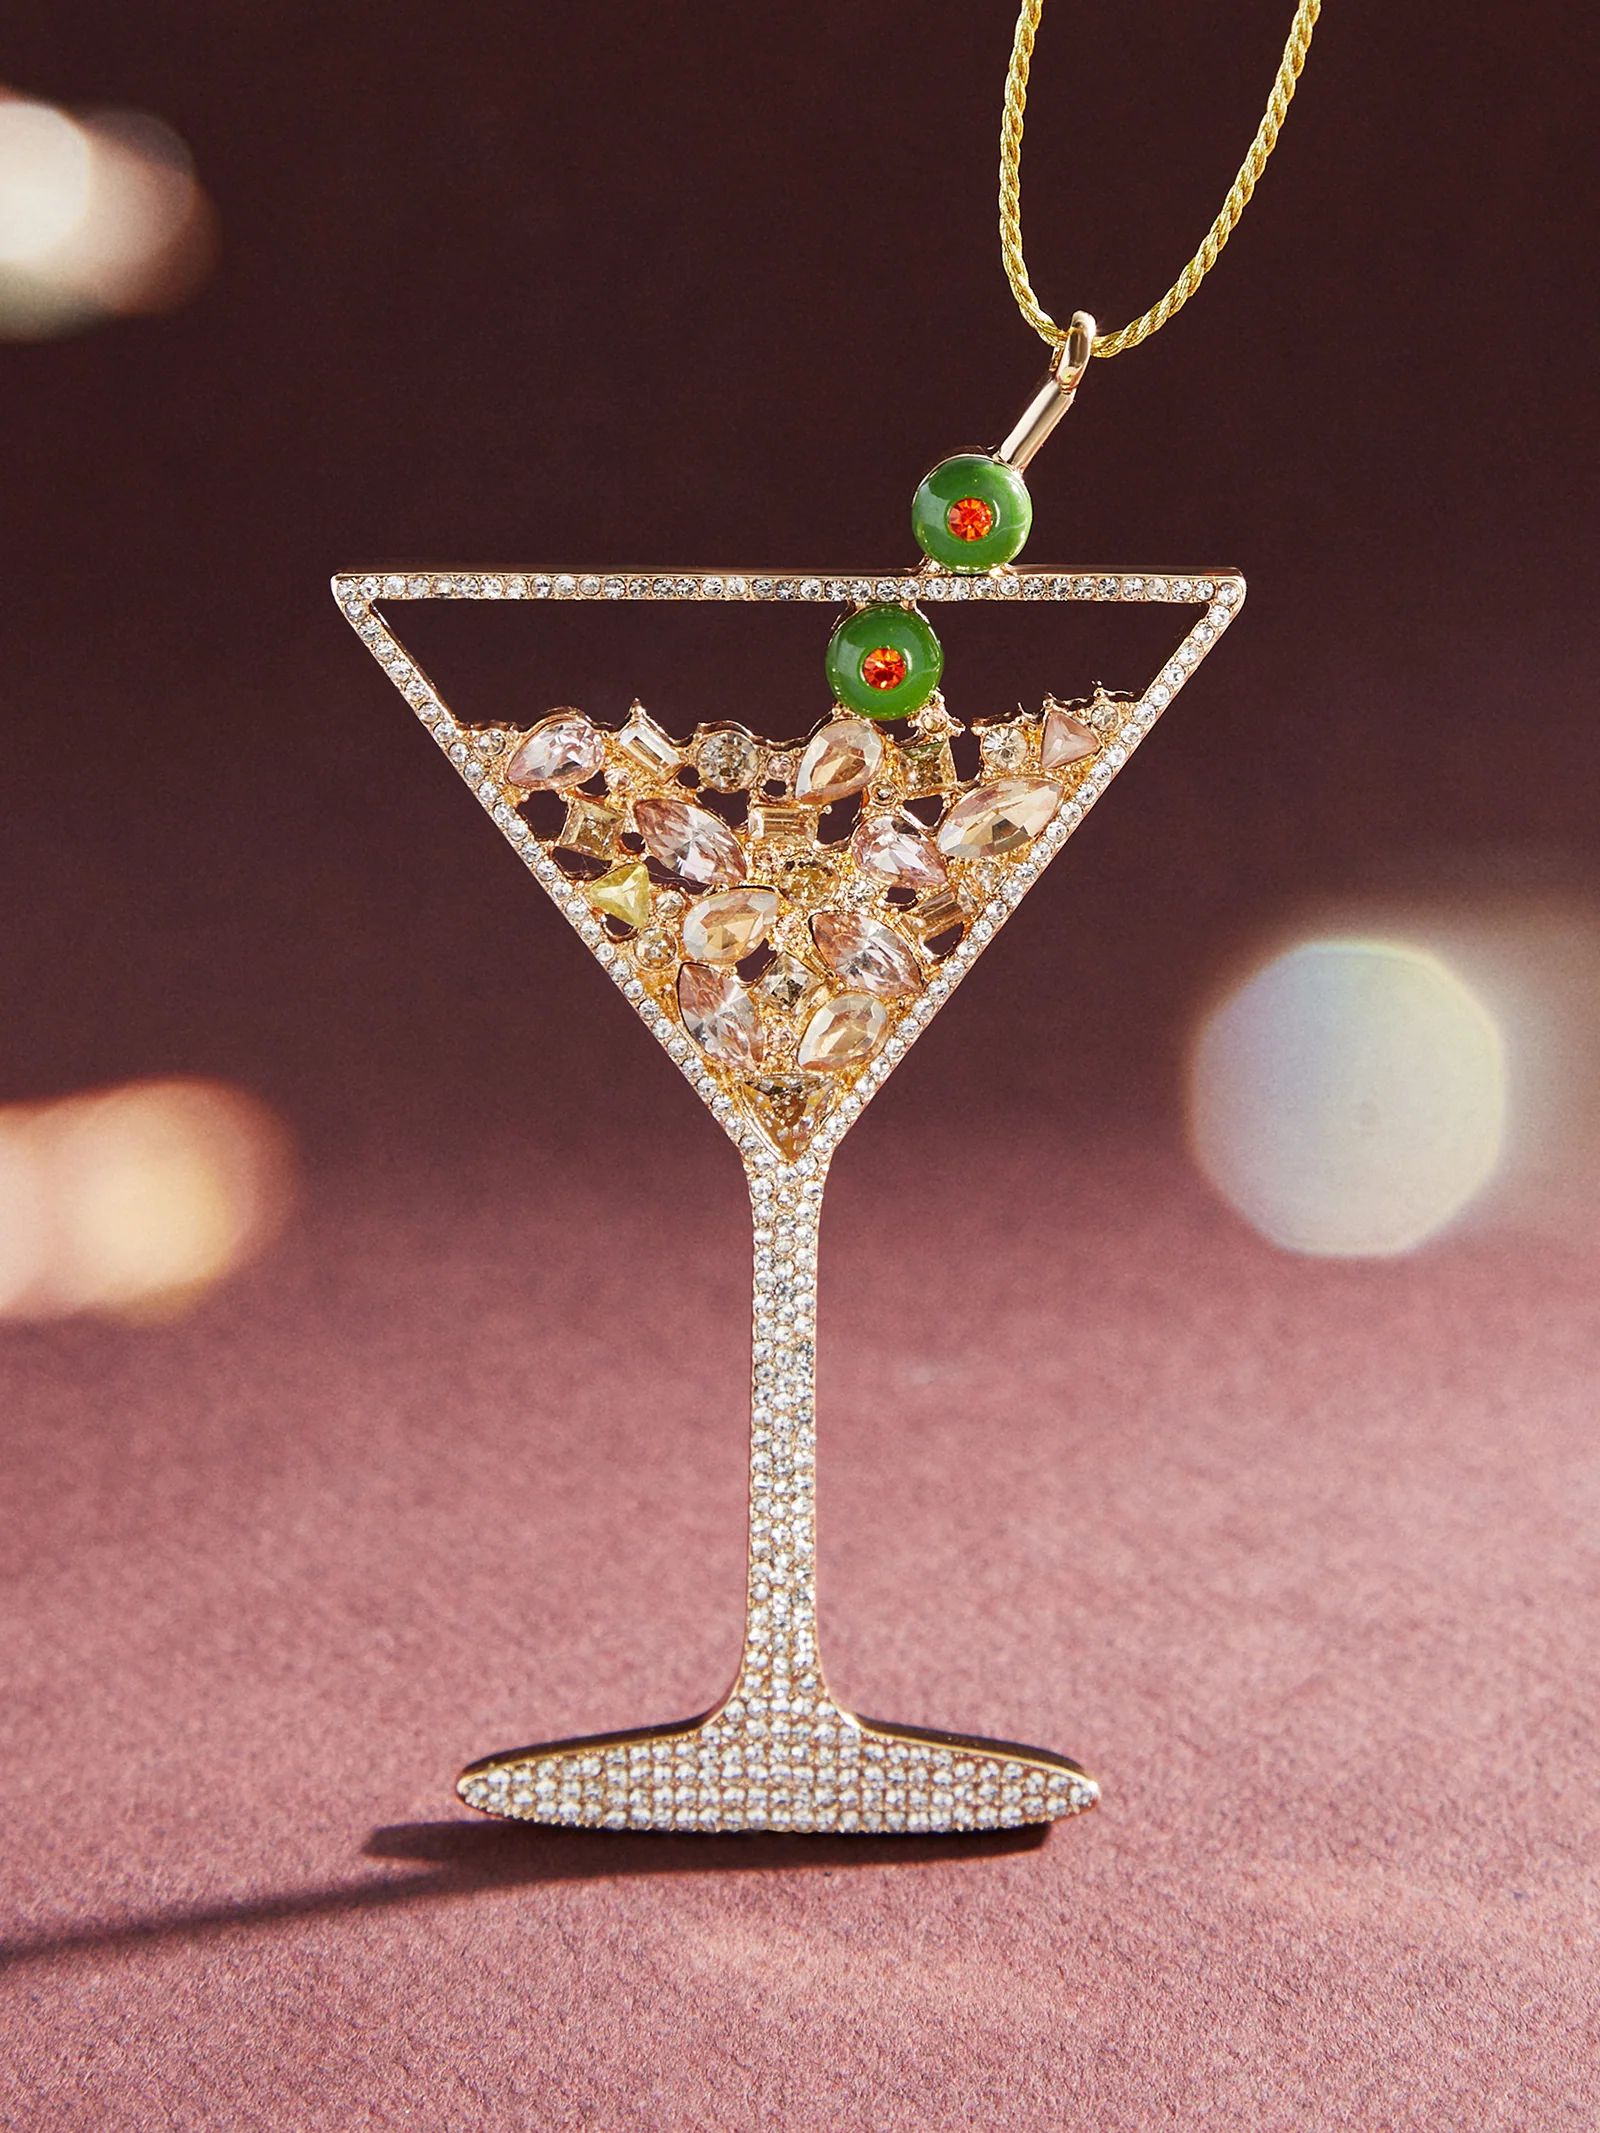 Shaken, Not Stirred, Ornament - Dirty Martini Ornament | BaubleBar (US)